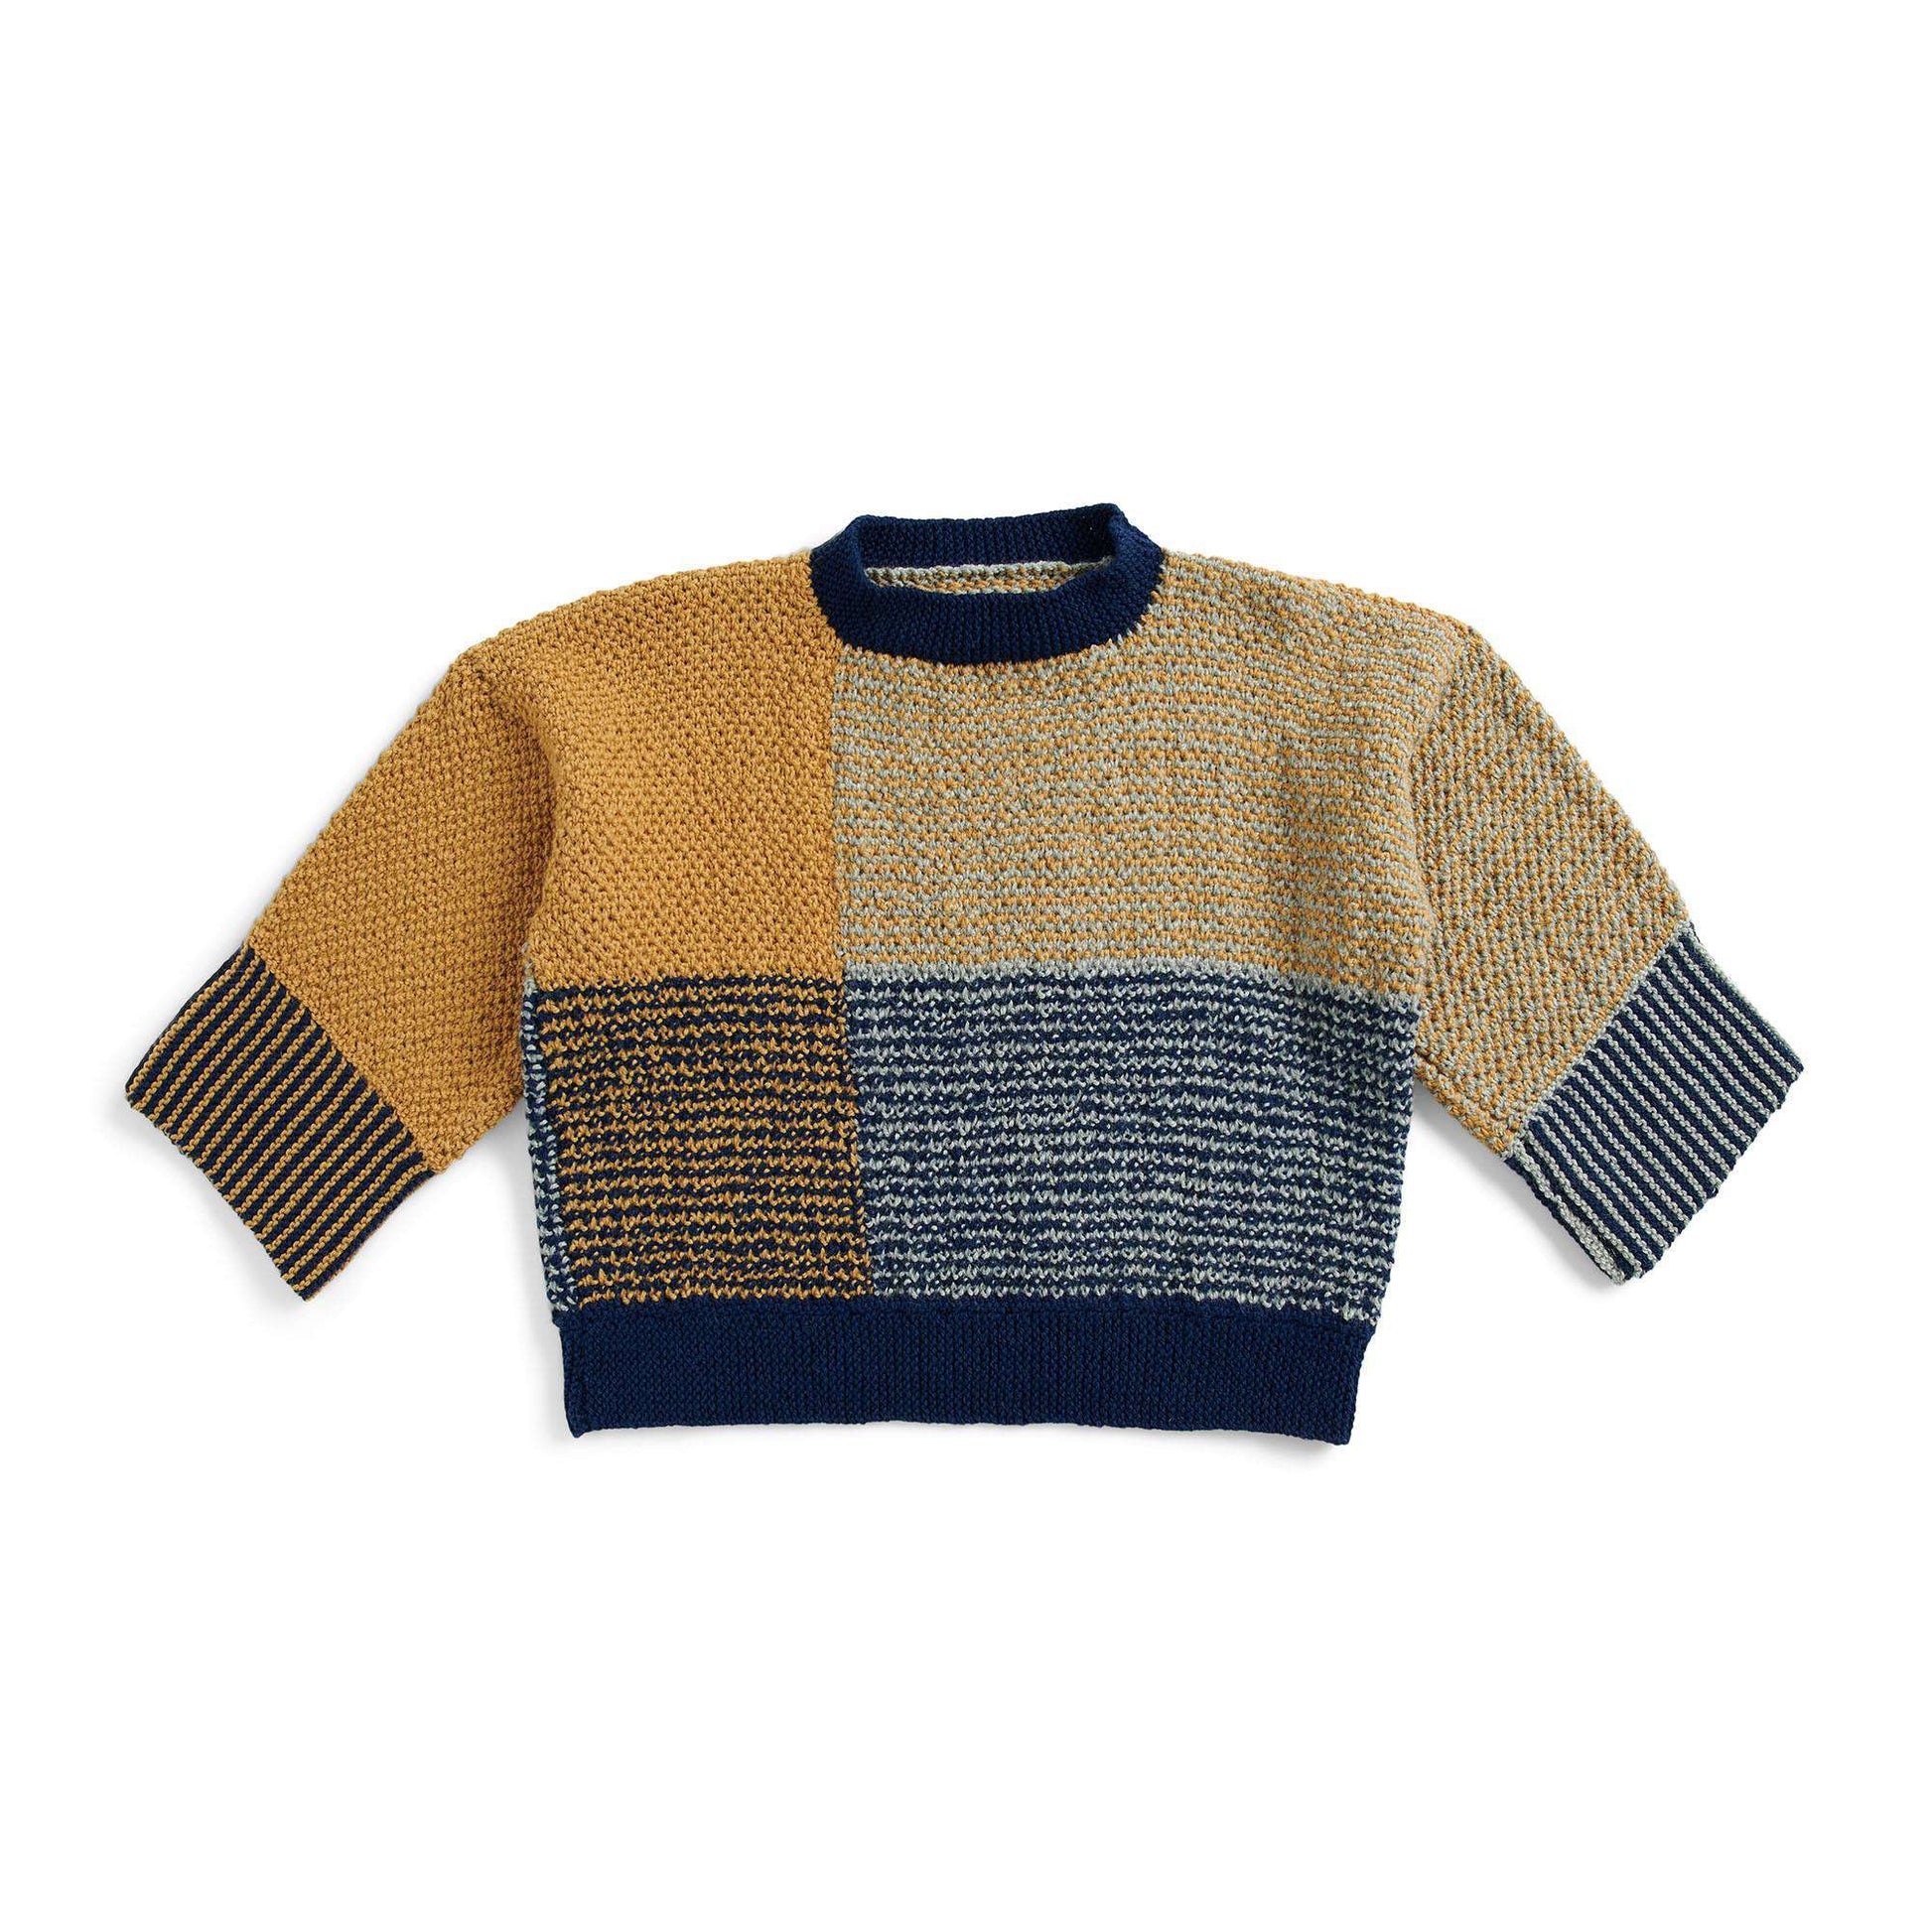 Free Patons Knit Blocked Cropped Sweater Pattern